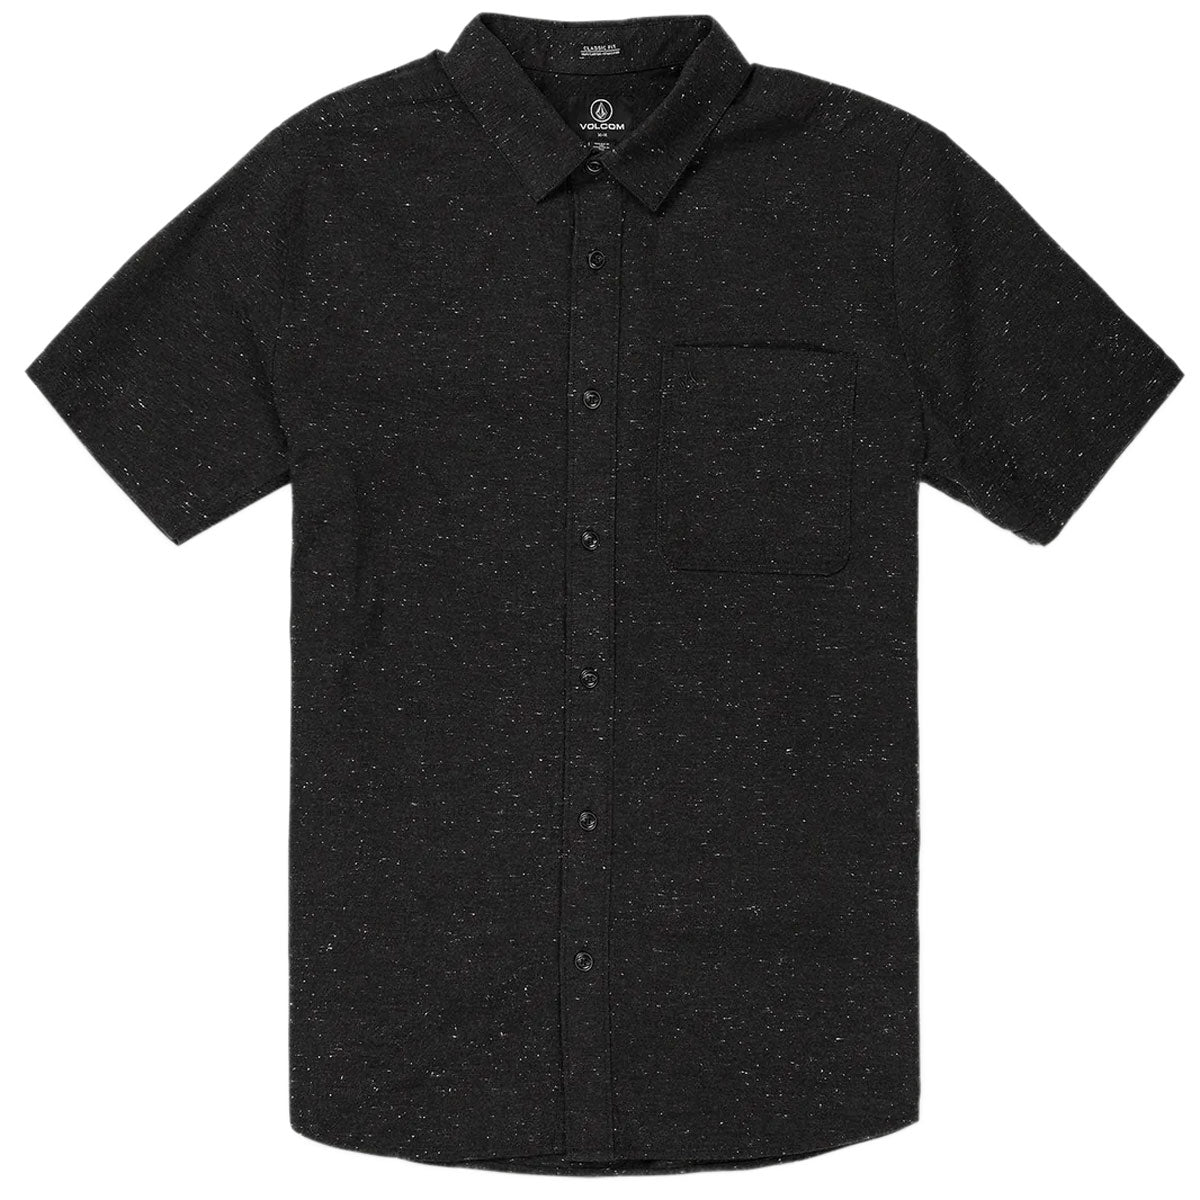 Volcom Date Knight Shirt - Black image 1